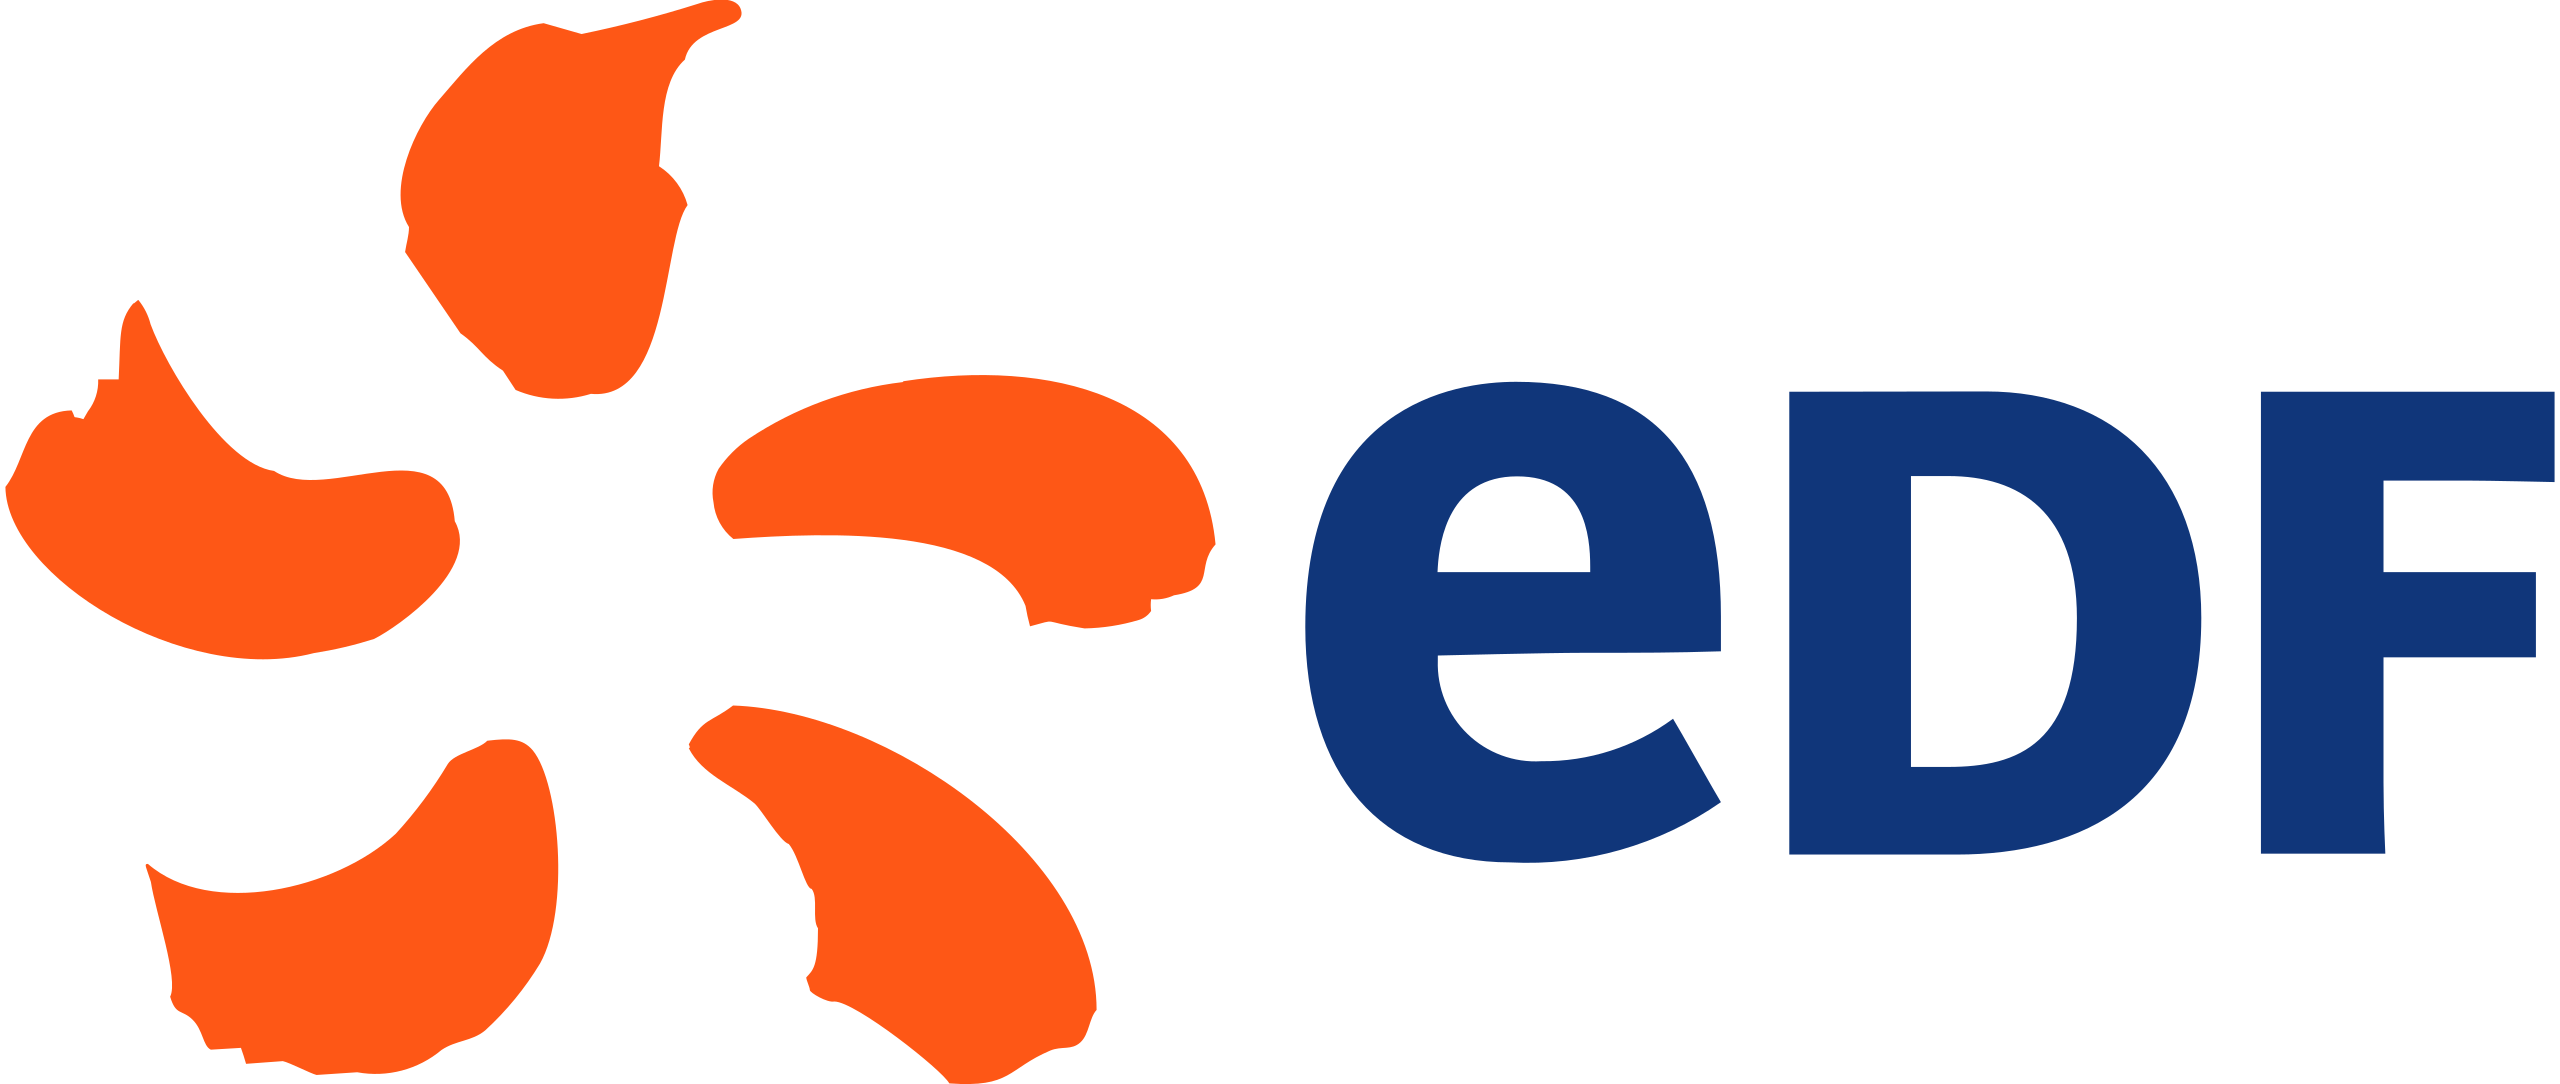 File:EDF Energy logo.svg - Wikipedia